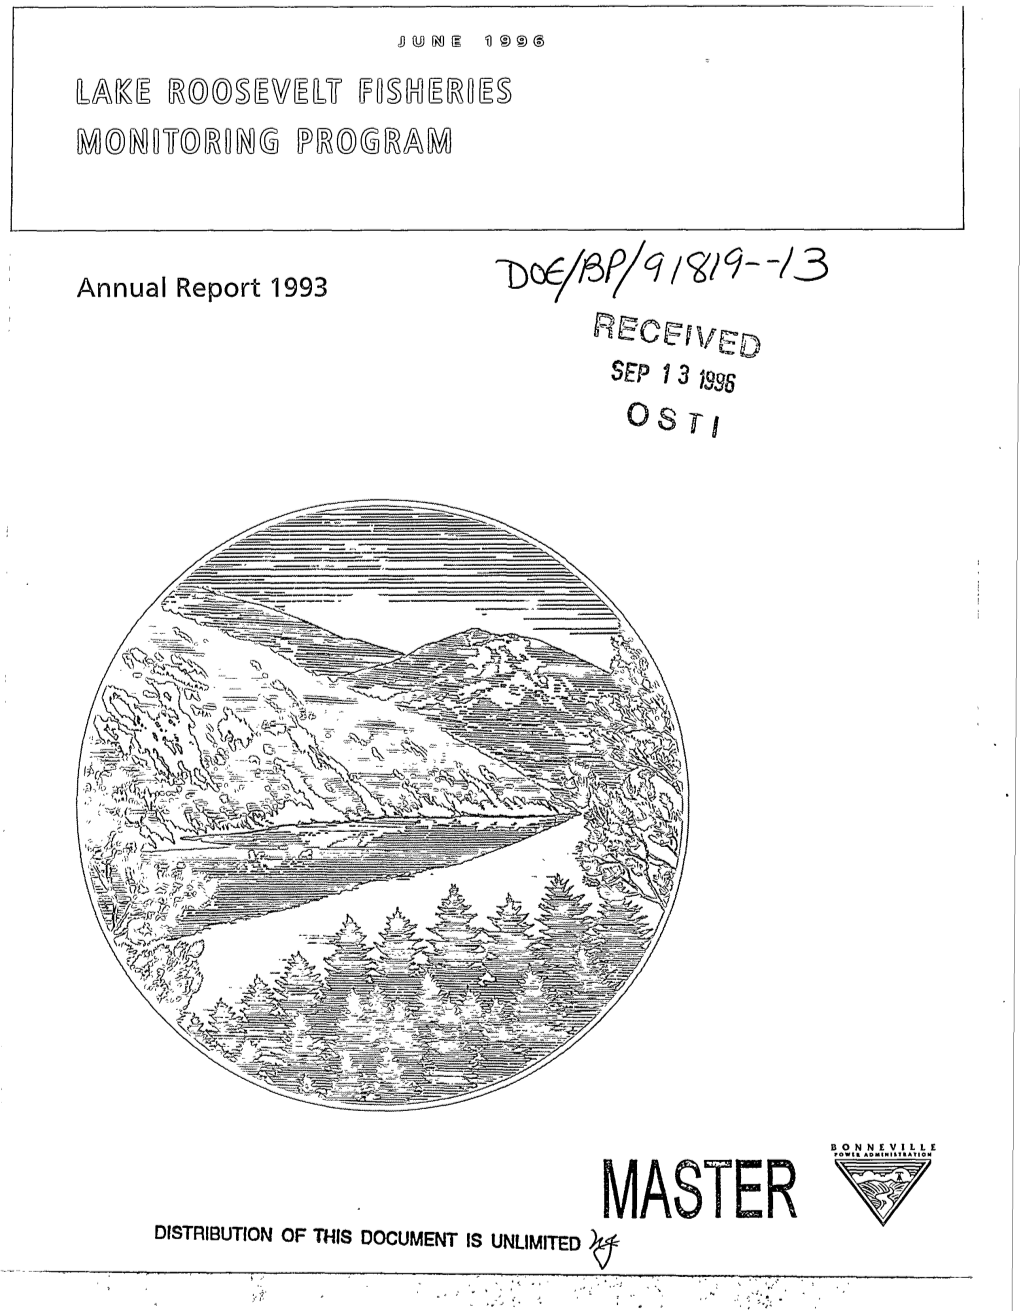 Lake Roosevelt Fisheries Monitoring Program. 1993 Annual Report